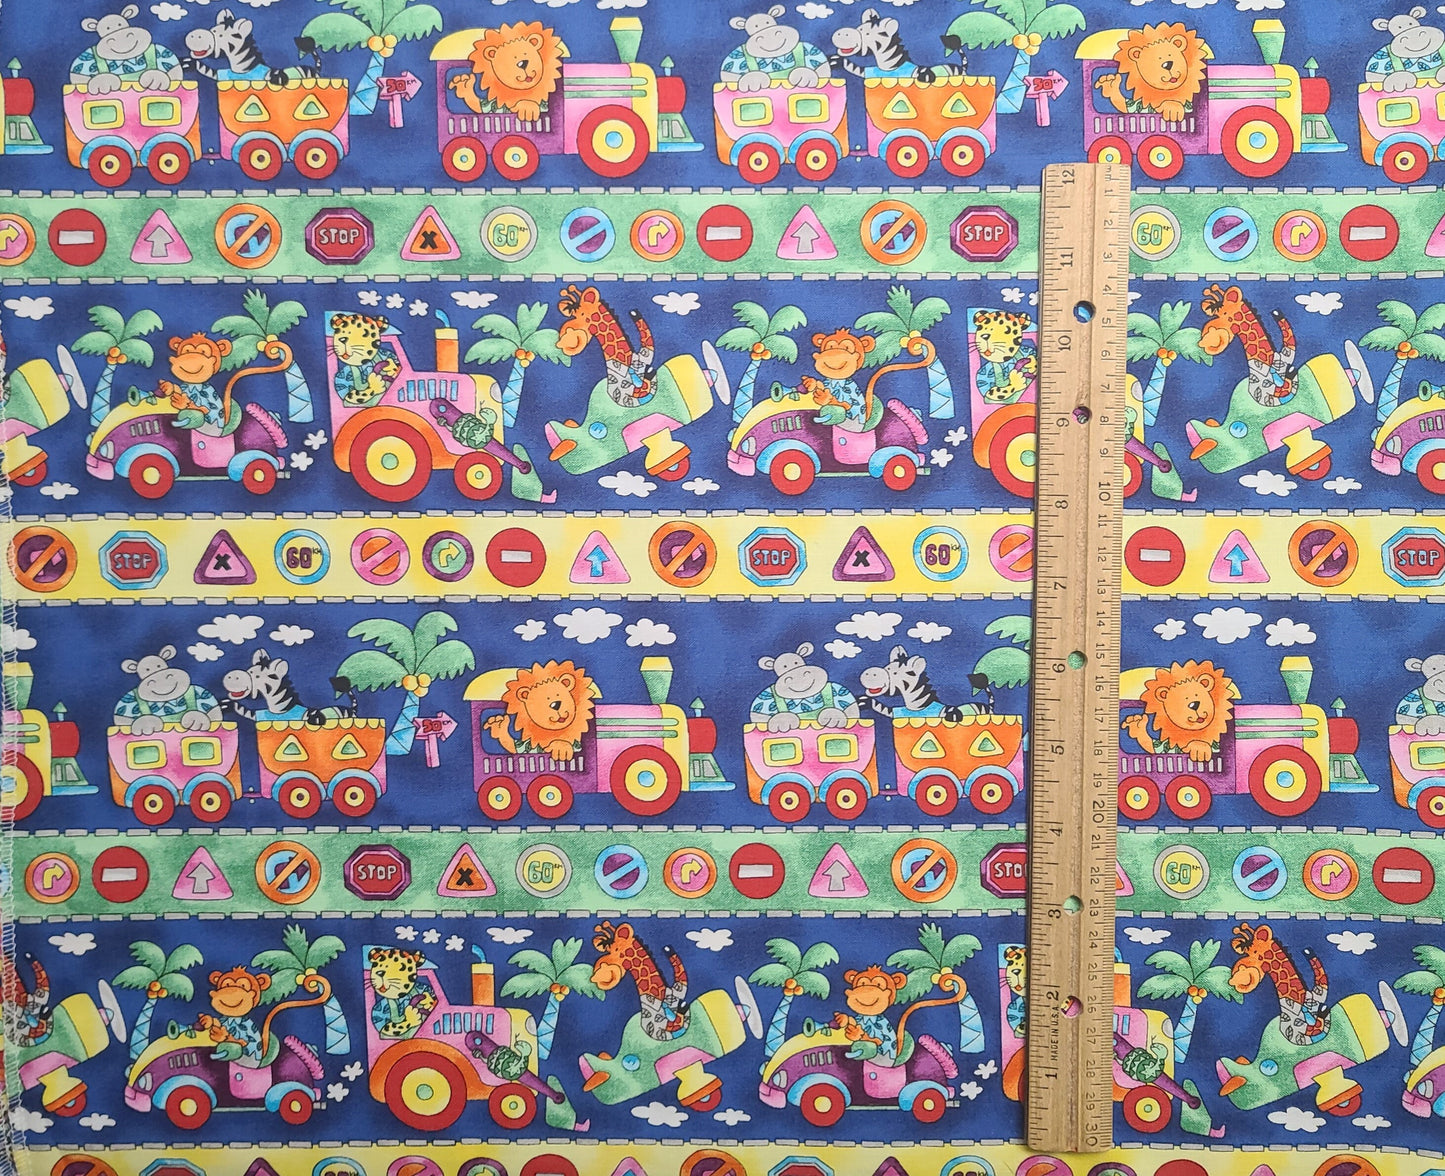 EOB - Hancock Fabrics - Brightly Colored Cartoon-Style Animal Train Border Print Fabric